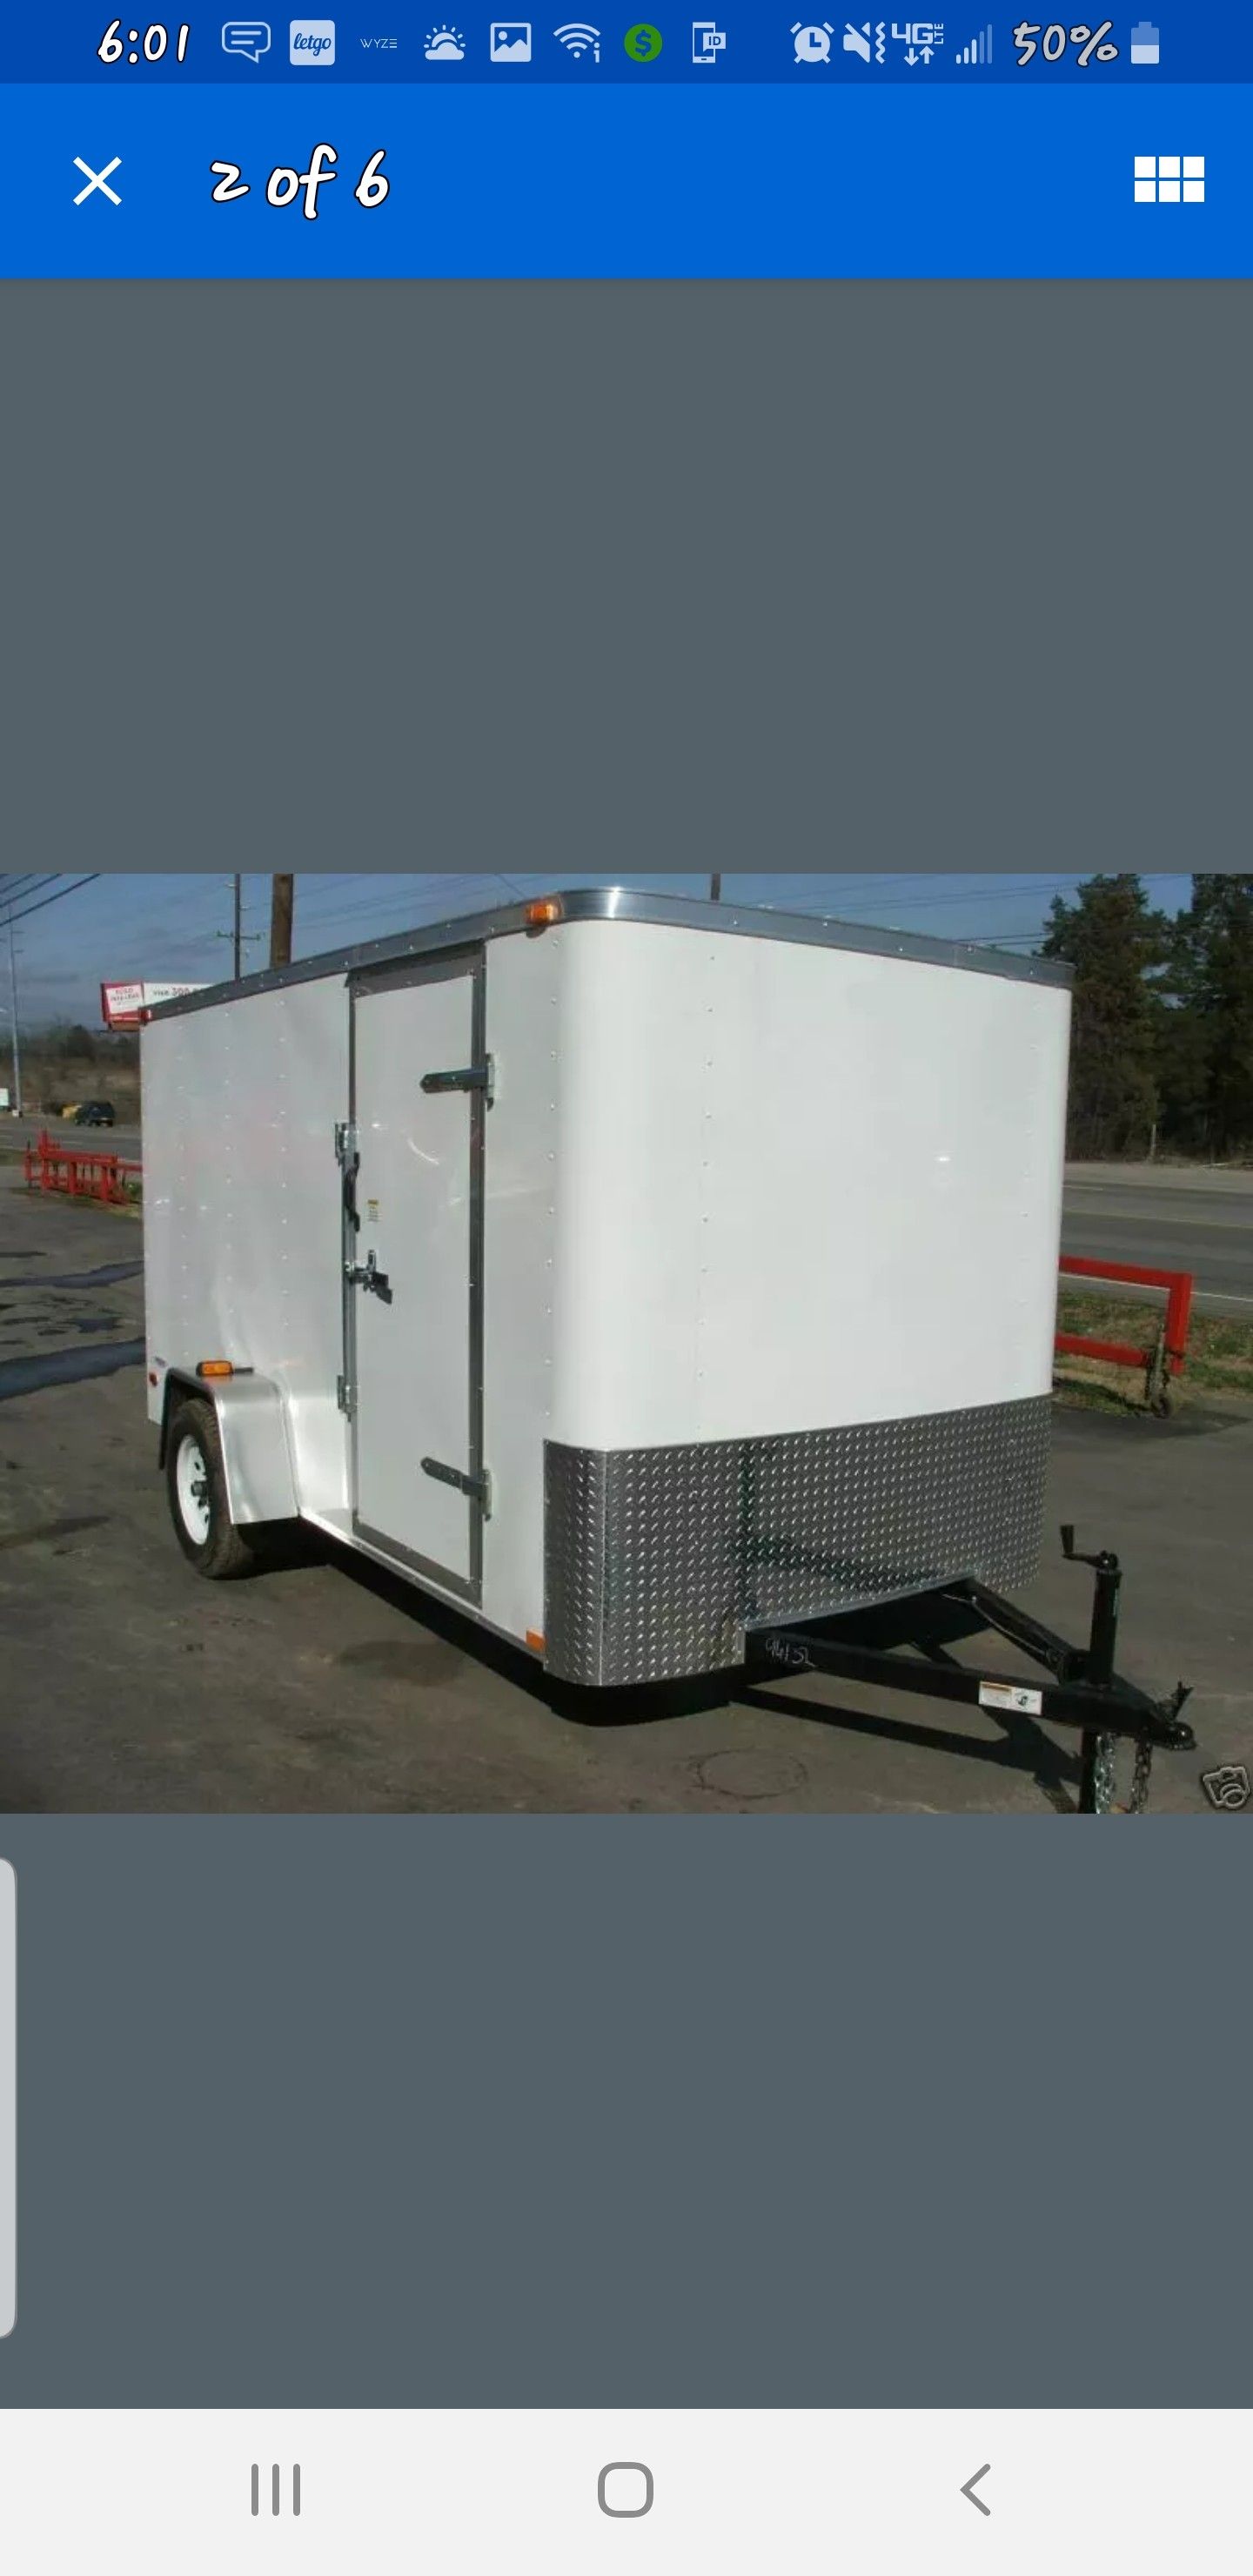 White enclosed utility trailer